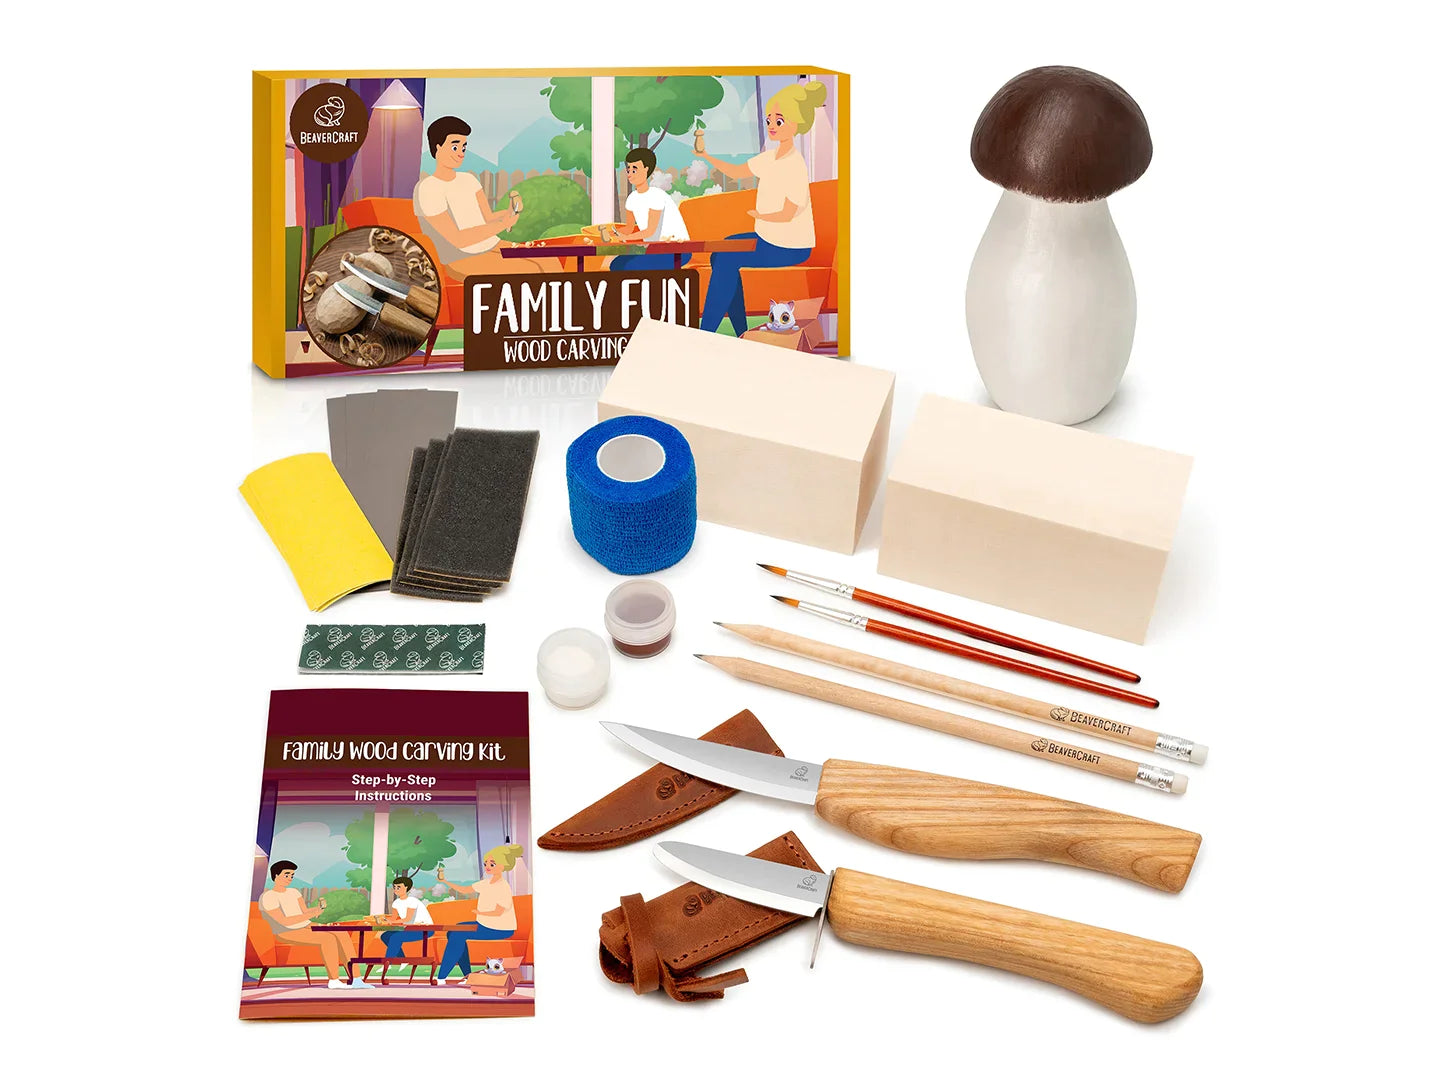 Beavercraft - Wizard Carving Kit